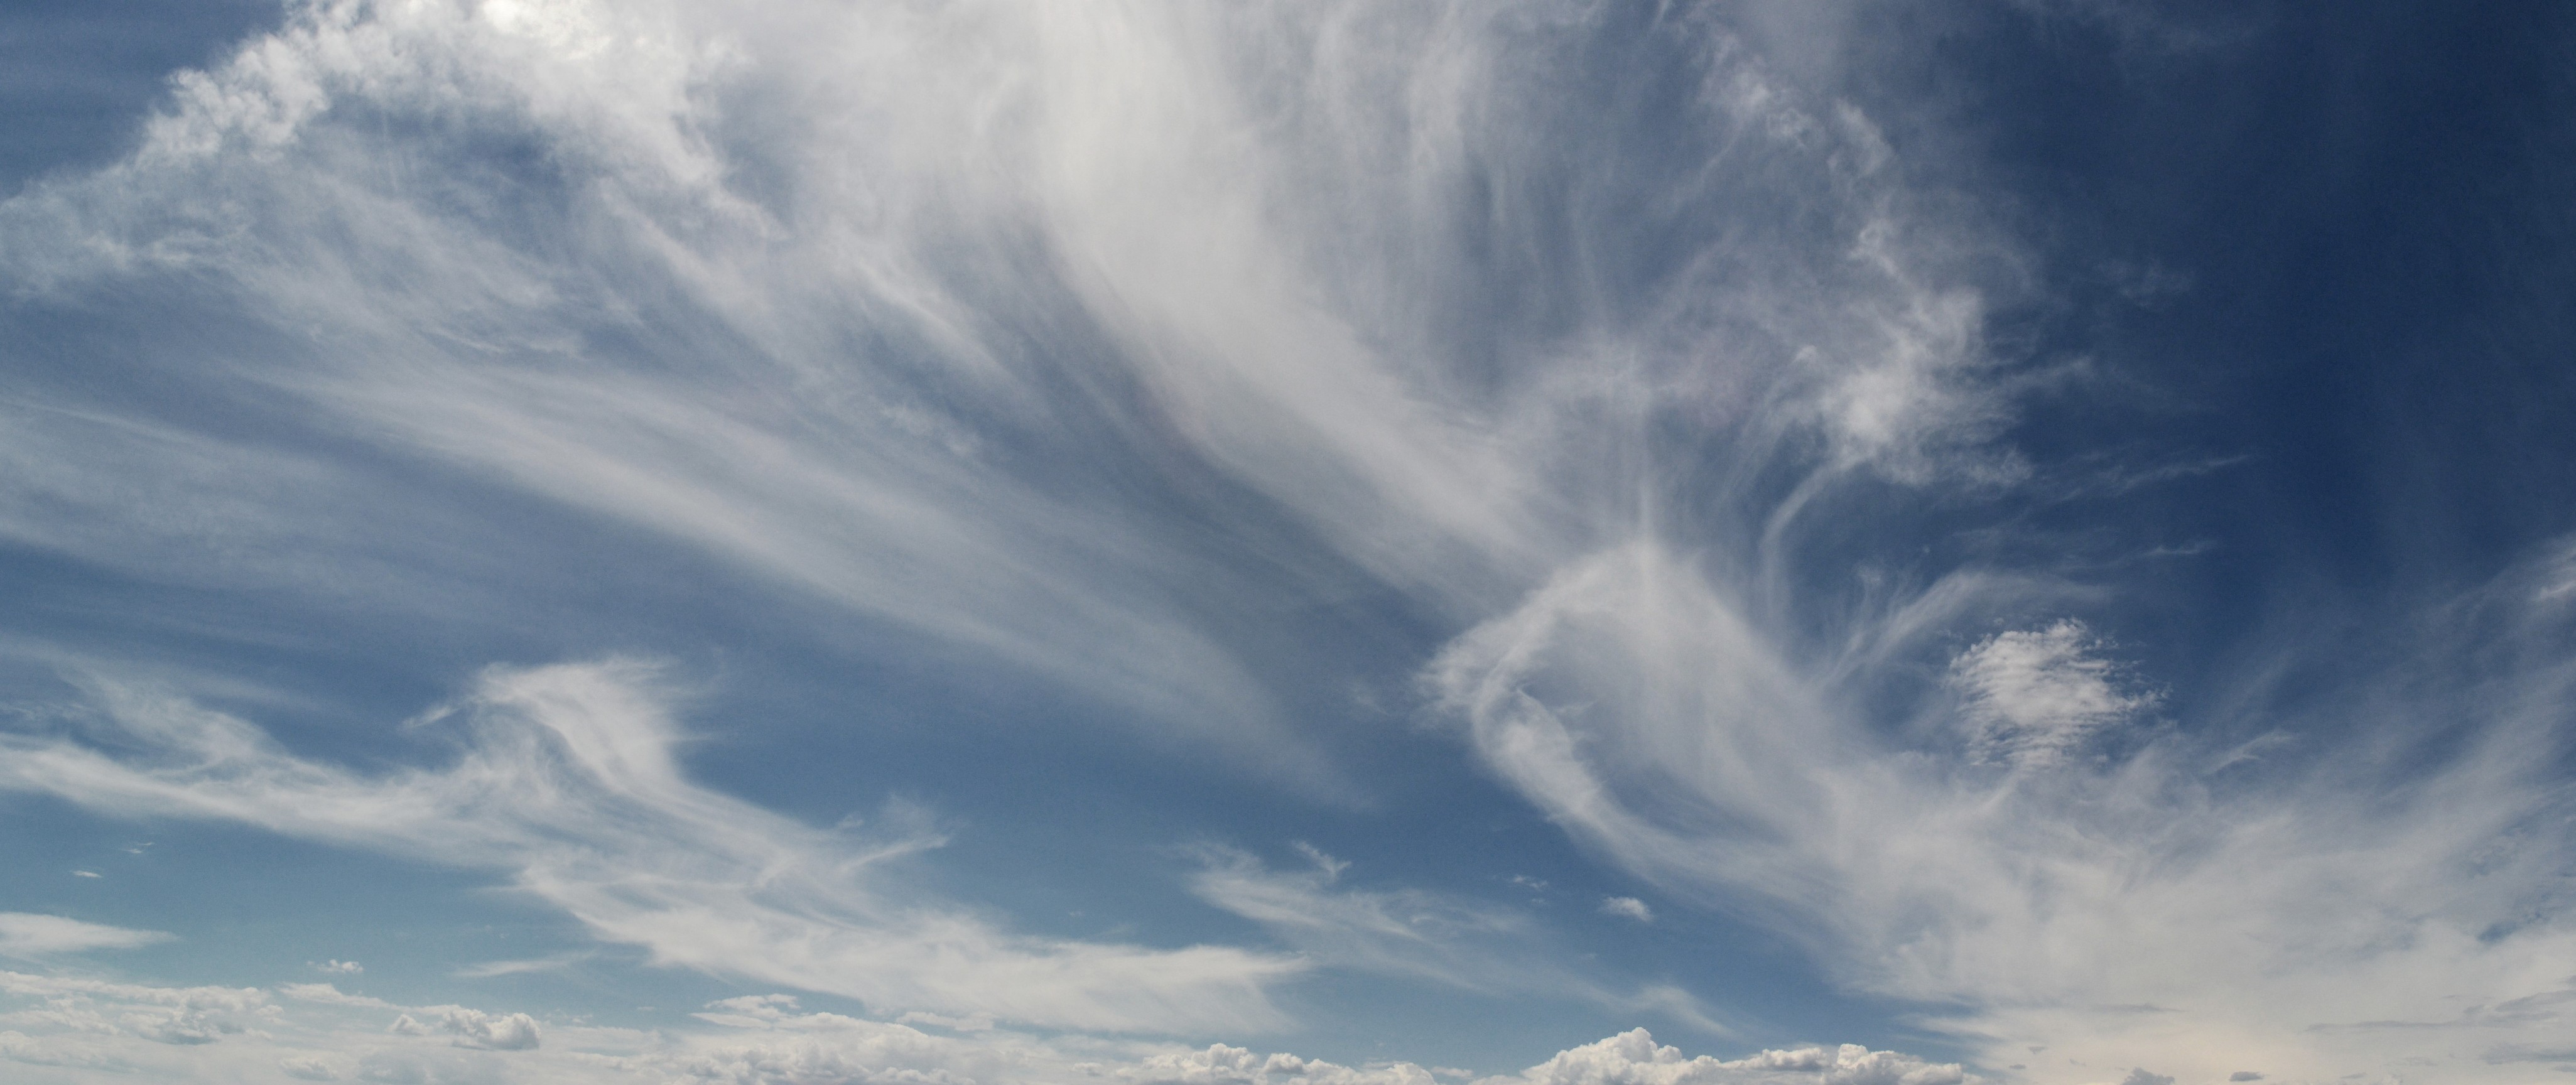 Wispy Cirrus Clouds, Speckled Stratus Clouds, 2011-07-04 - Cirrus ...